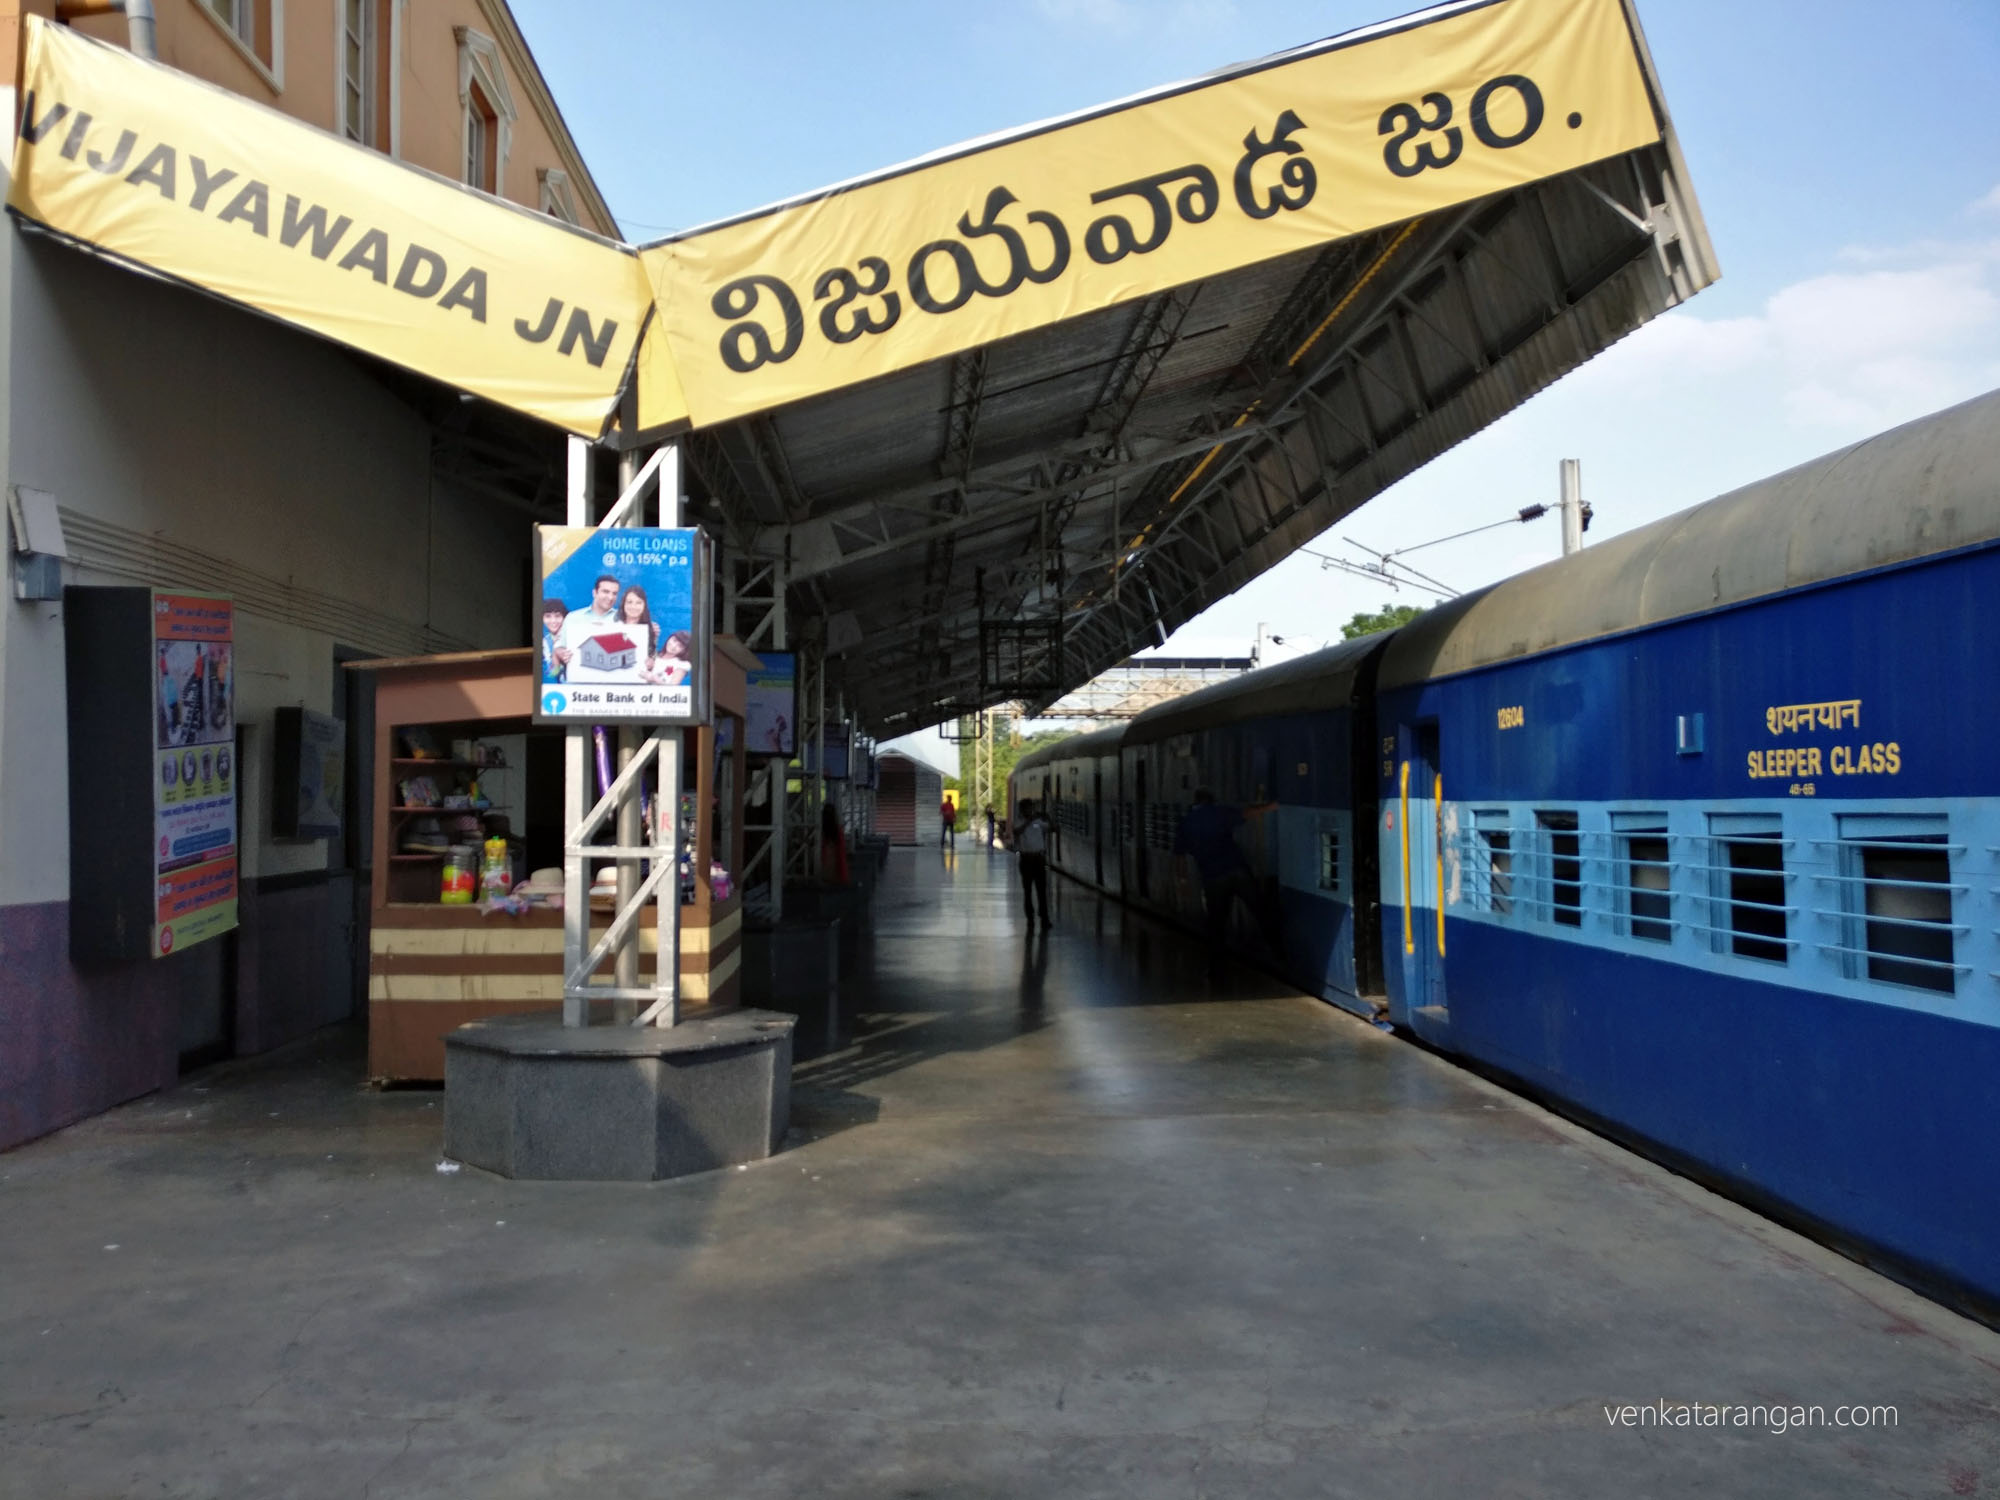 Ramoji Film City - A Railyway station that has 3 names - Vijayawada, Hyderabad, and, Chennai Basin Bridge